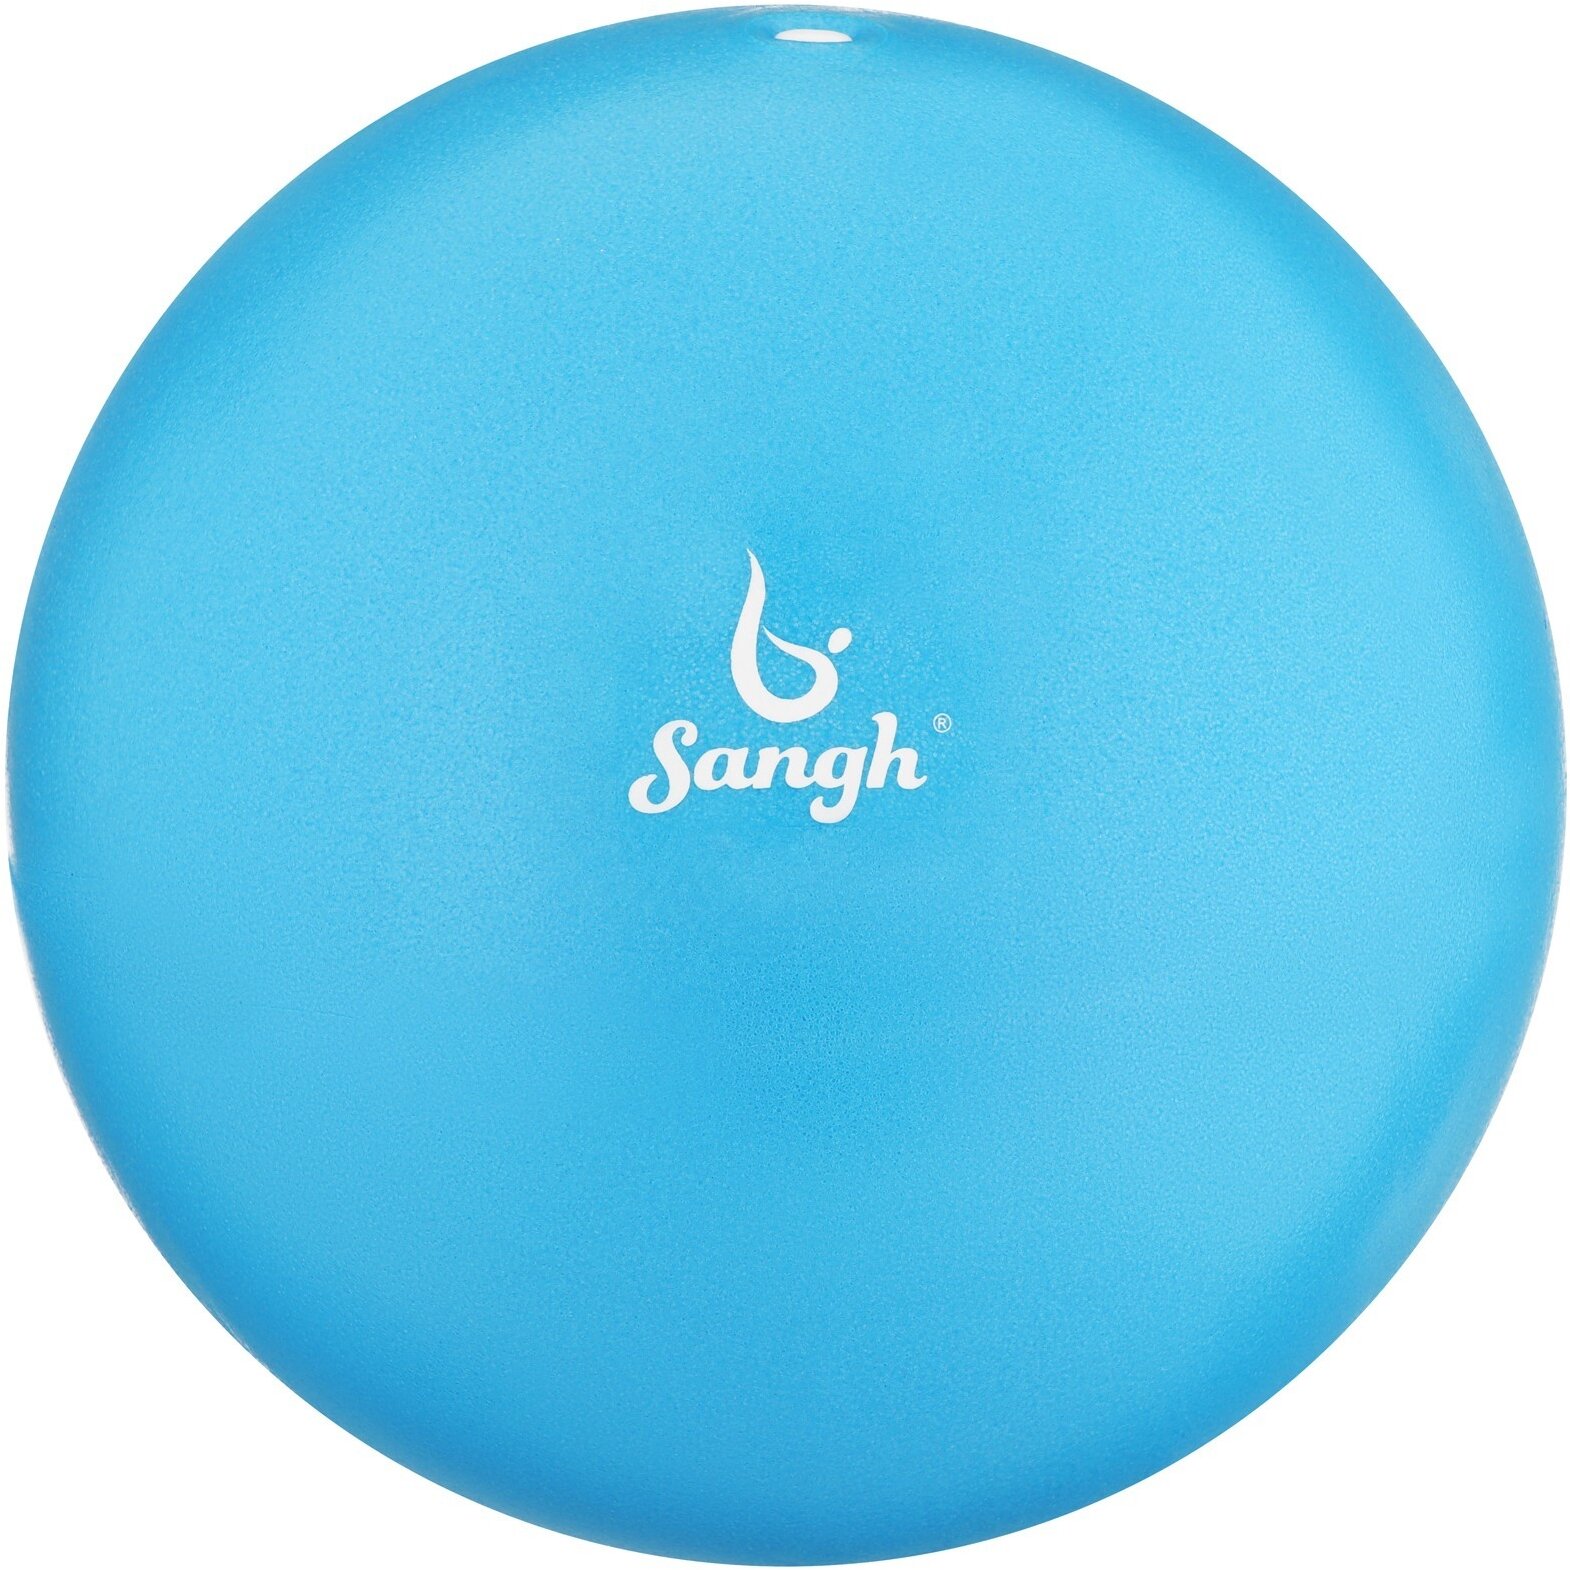 Sangh Мяч для йоги Sangh, d=25 см, 100 г, цвет синий